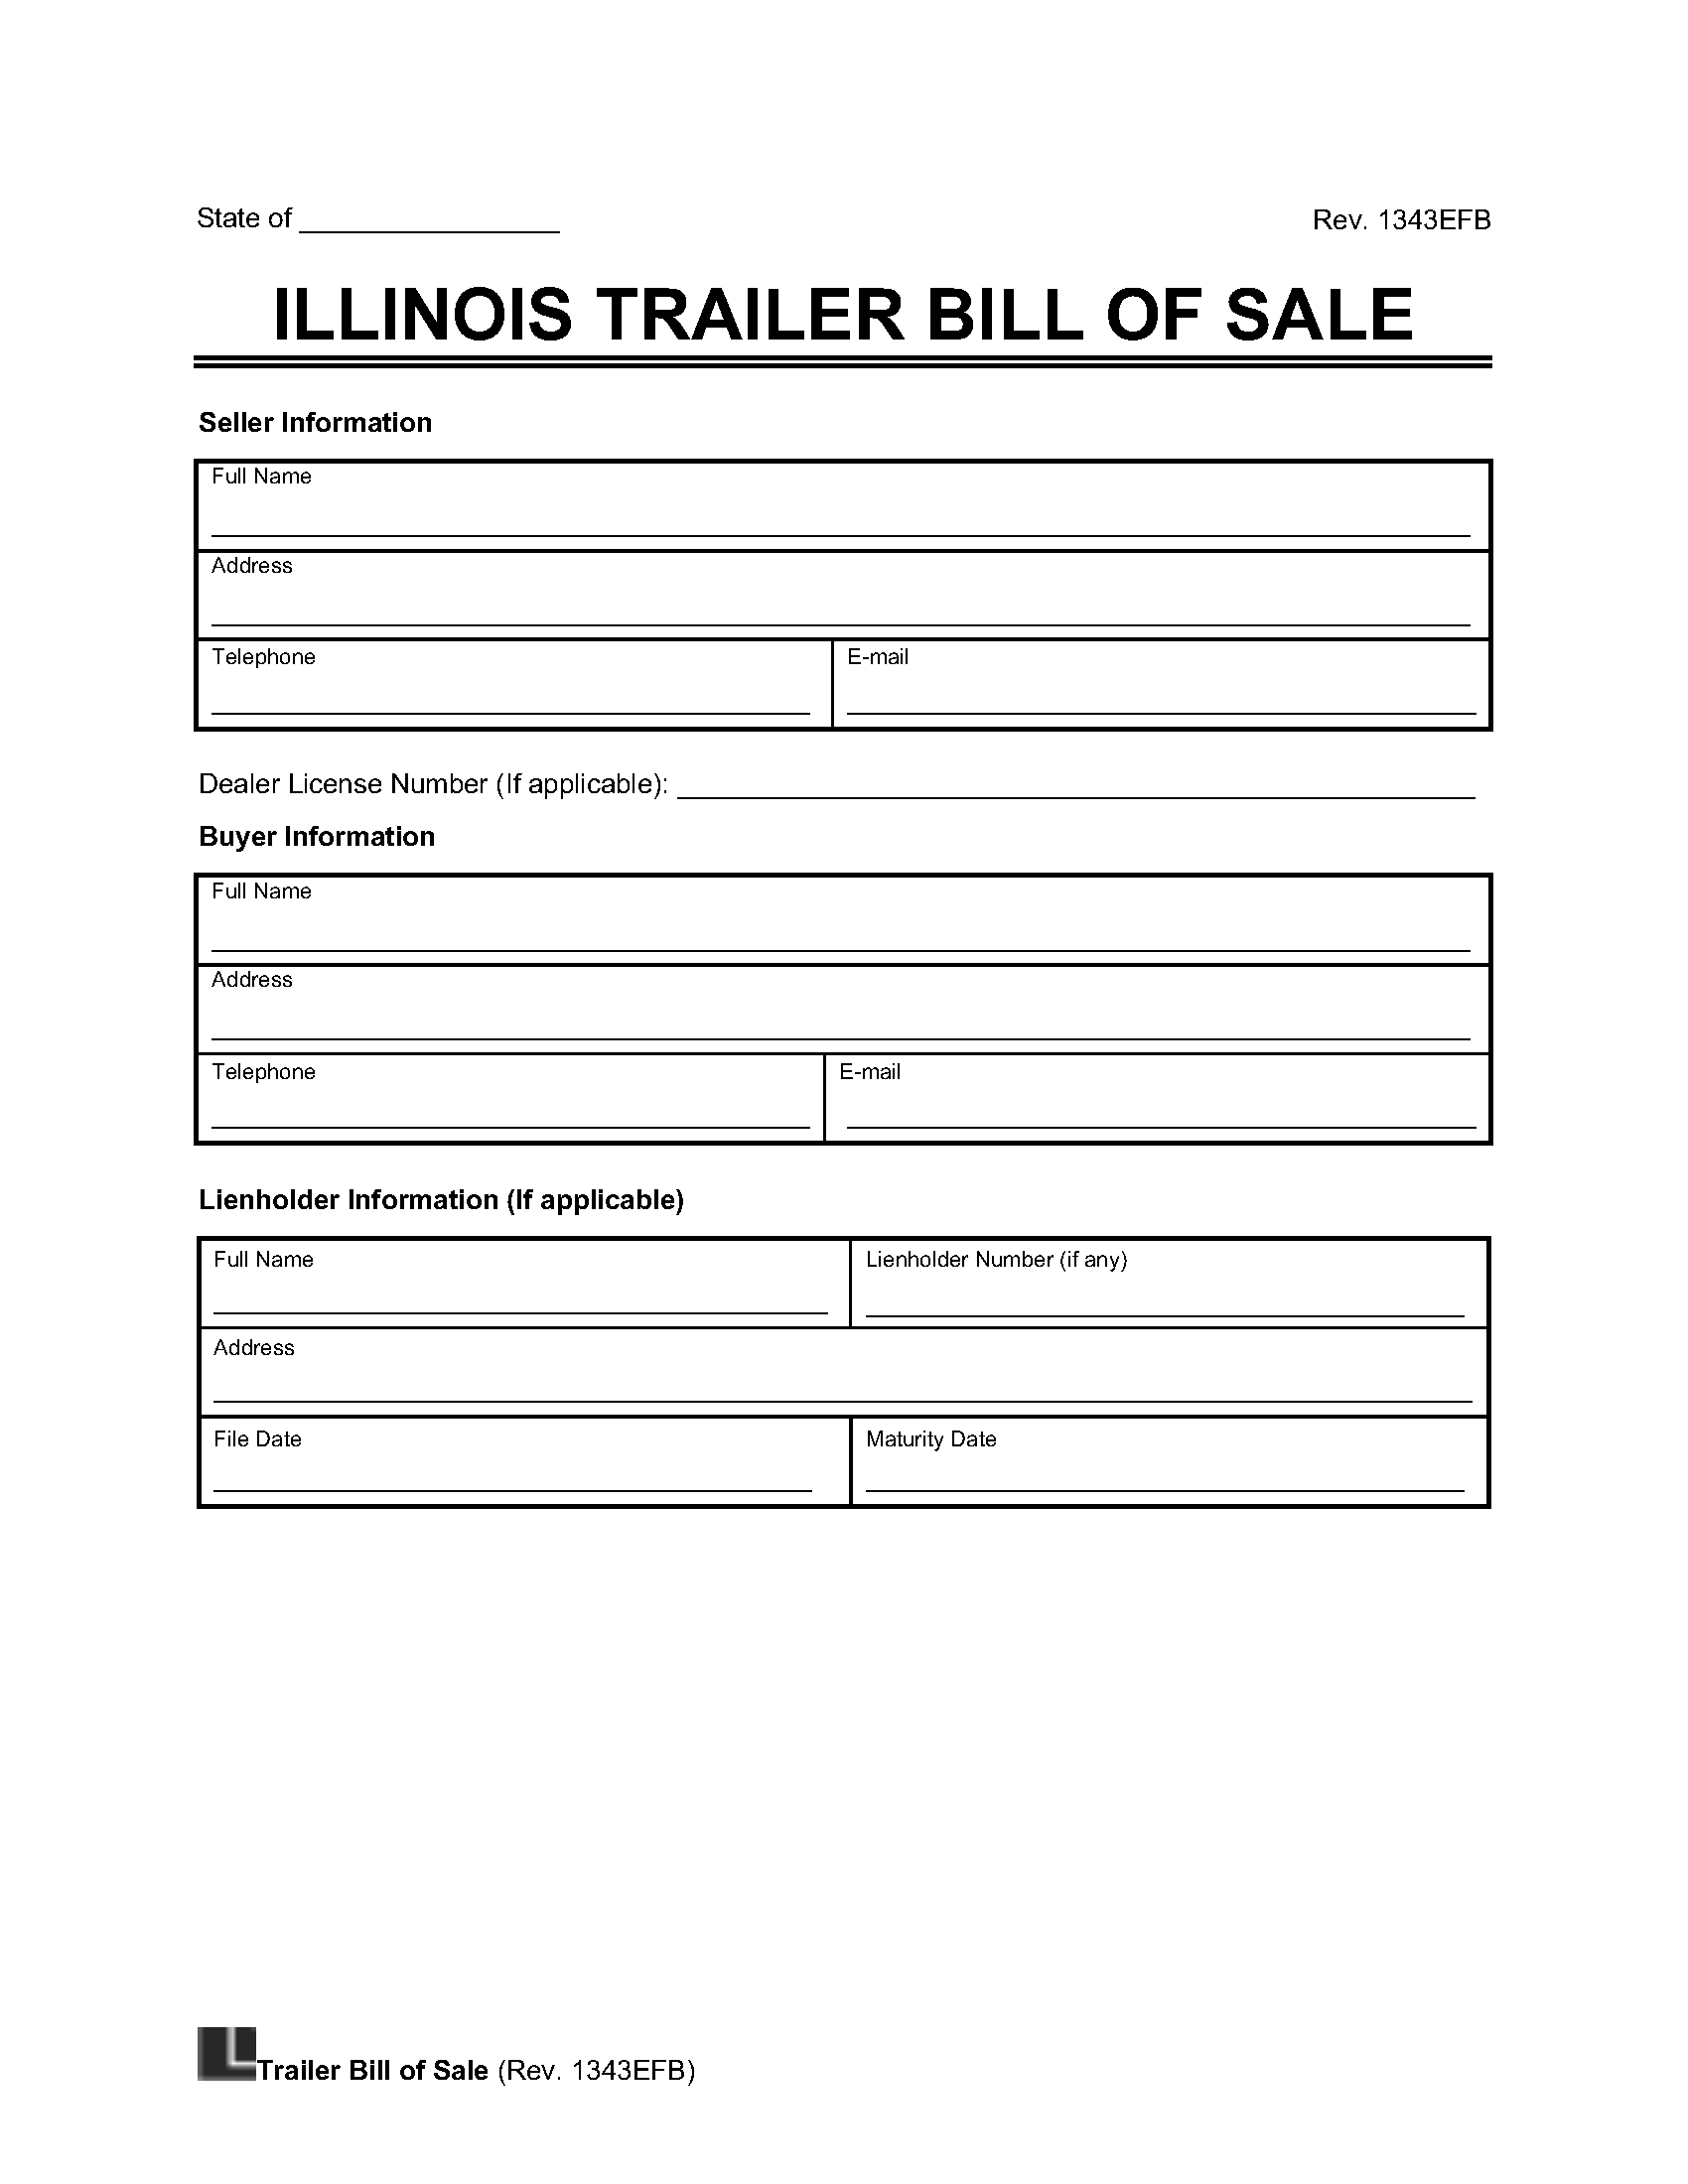 Illinois Trailer Bill of Sale screenshot